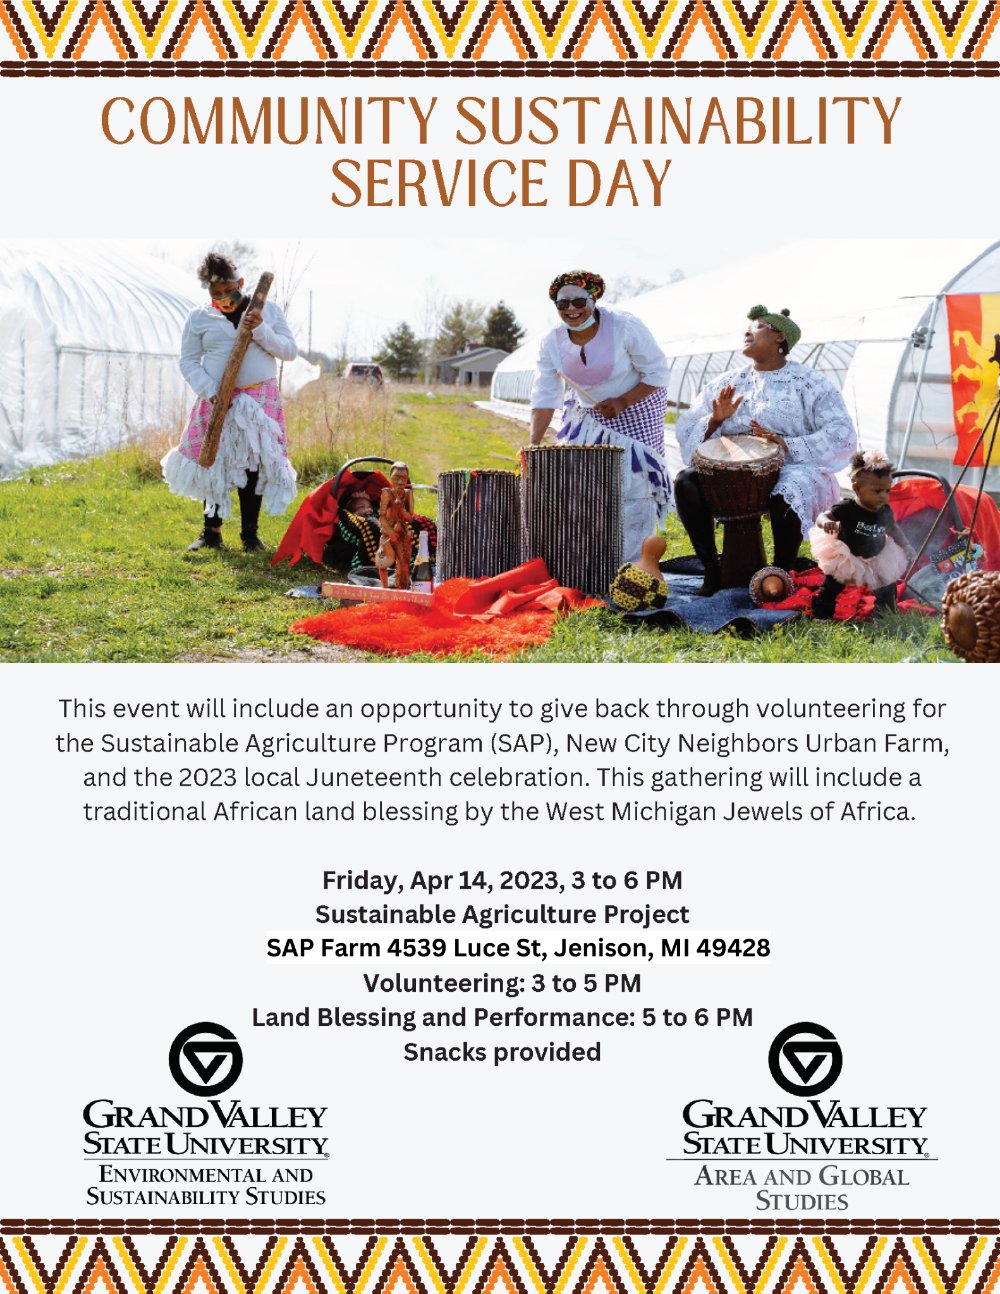 Community Sustainability Service Day flyer